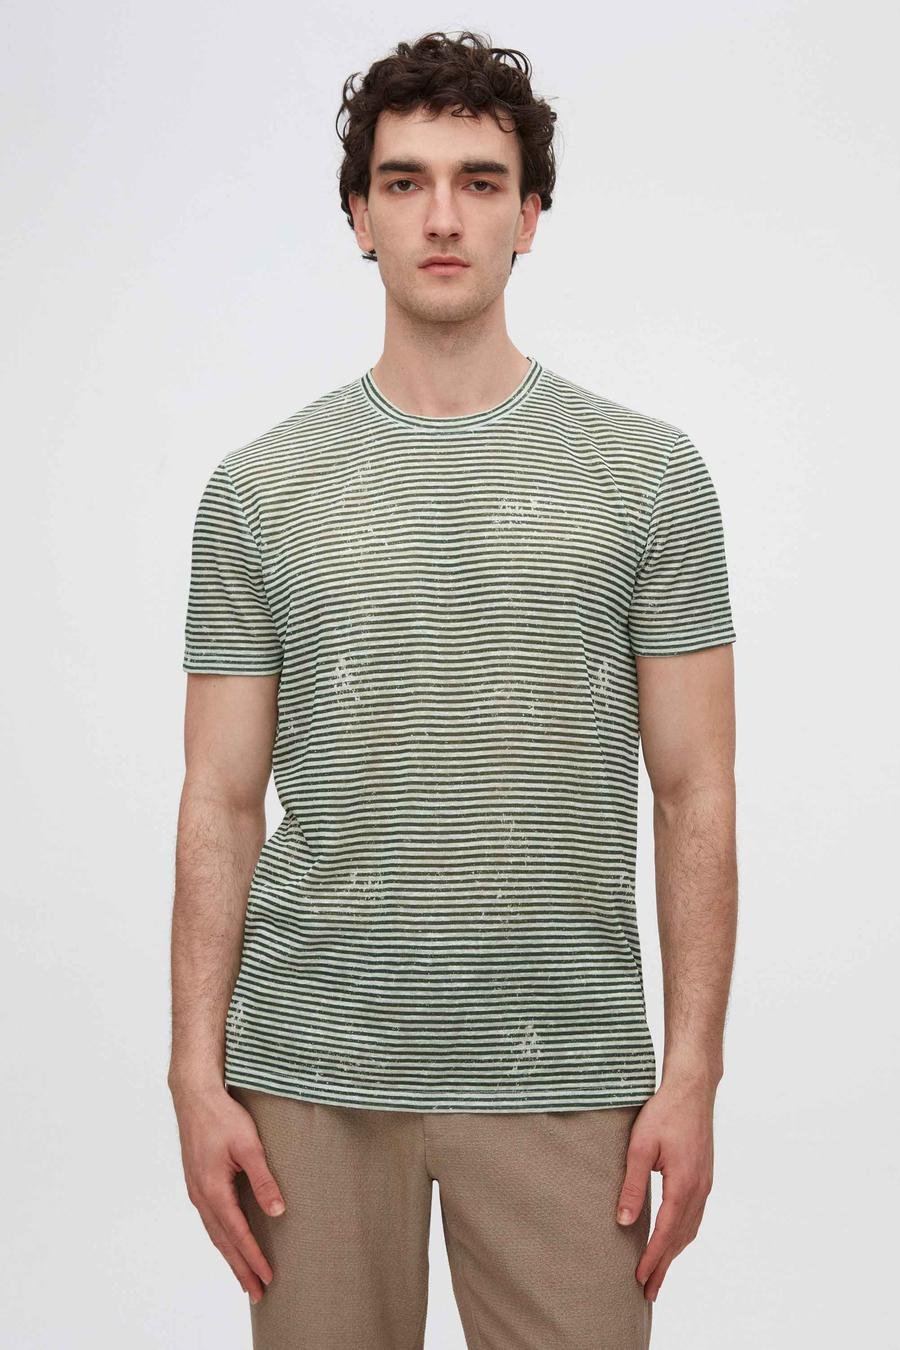 Twn Slim Fit Yeşil Çizgi Baskılı T-Shirt - 8683925125267 | D'S Damat